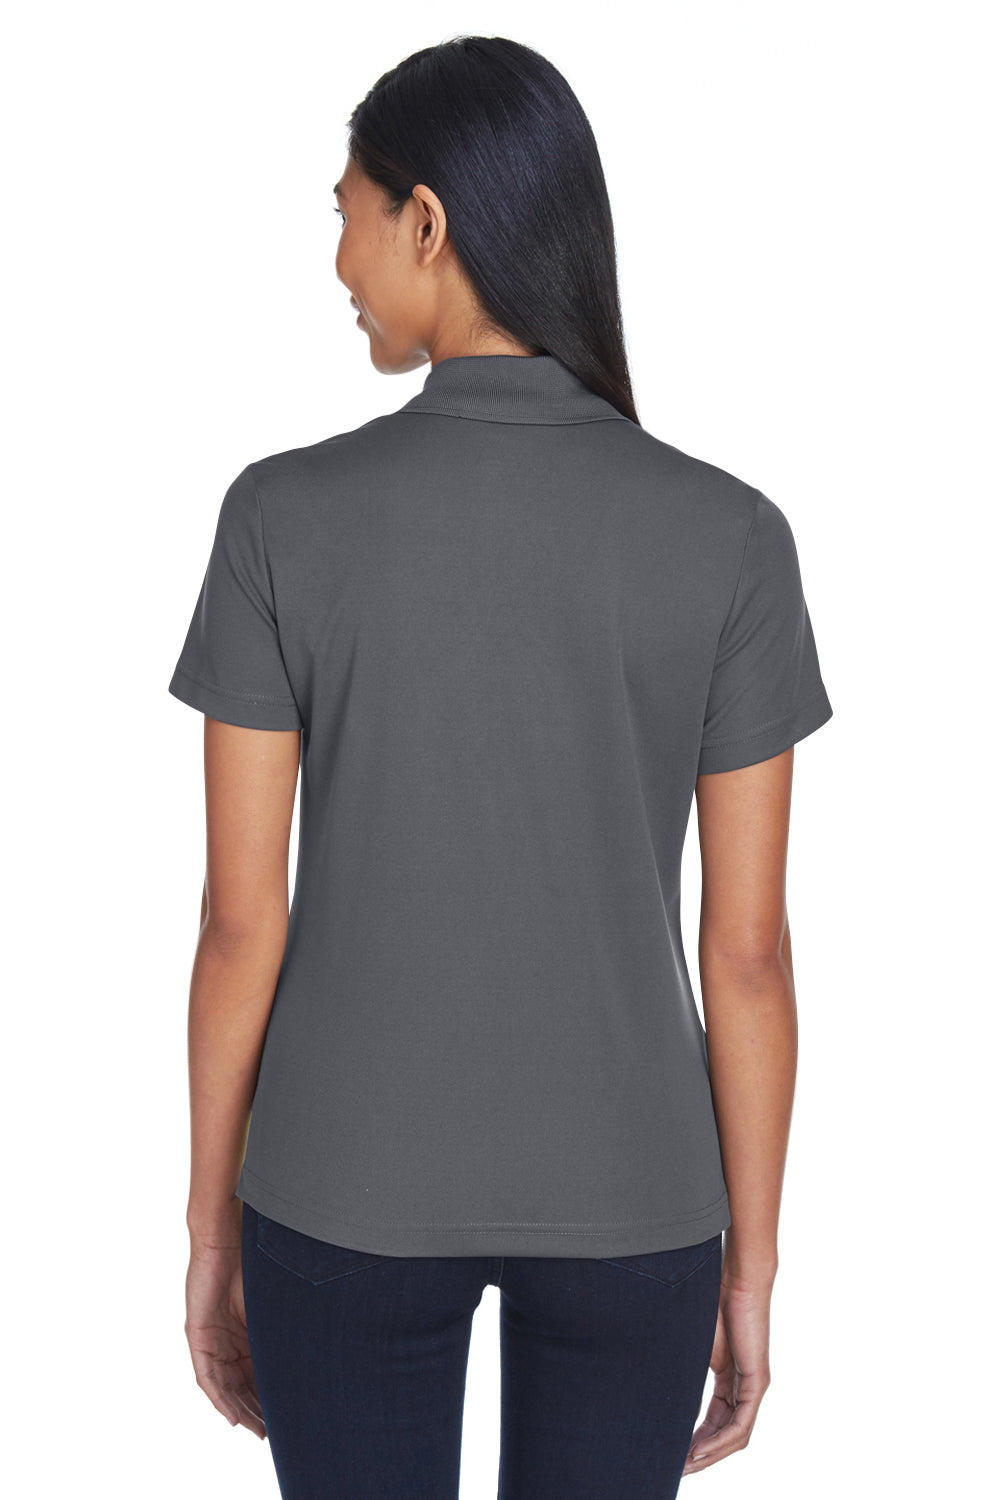 Core 365 CE101W Womens Balance Performance Moisture Wicking Short Sleeve Polo Shirt Safety Yellow/Grey Back